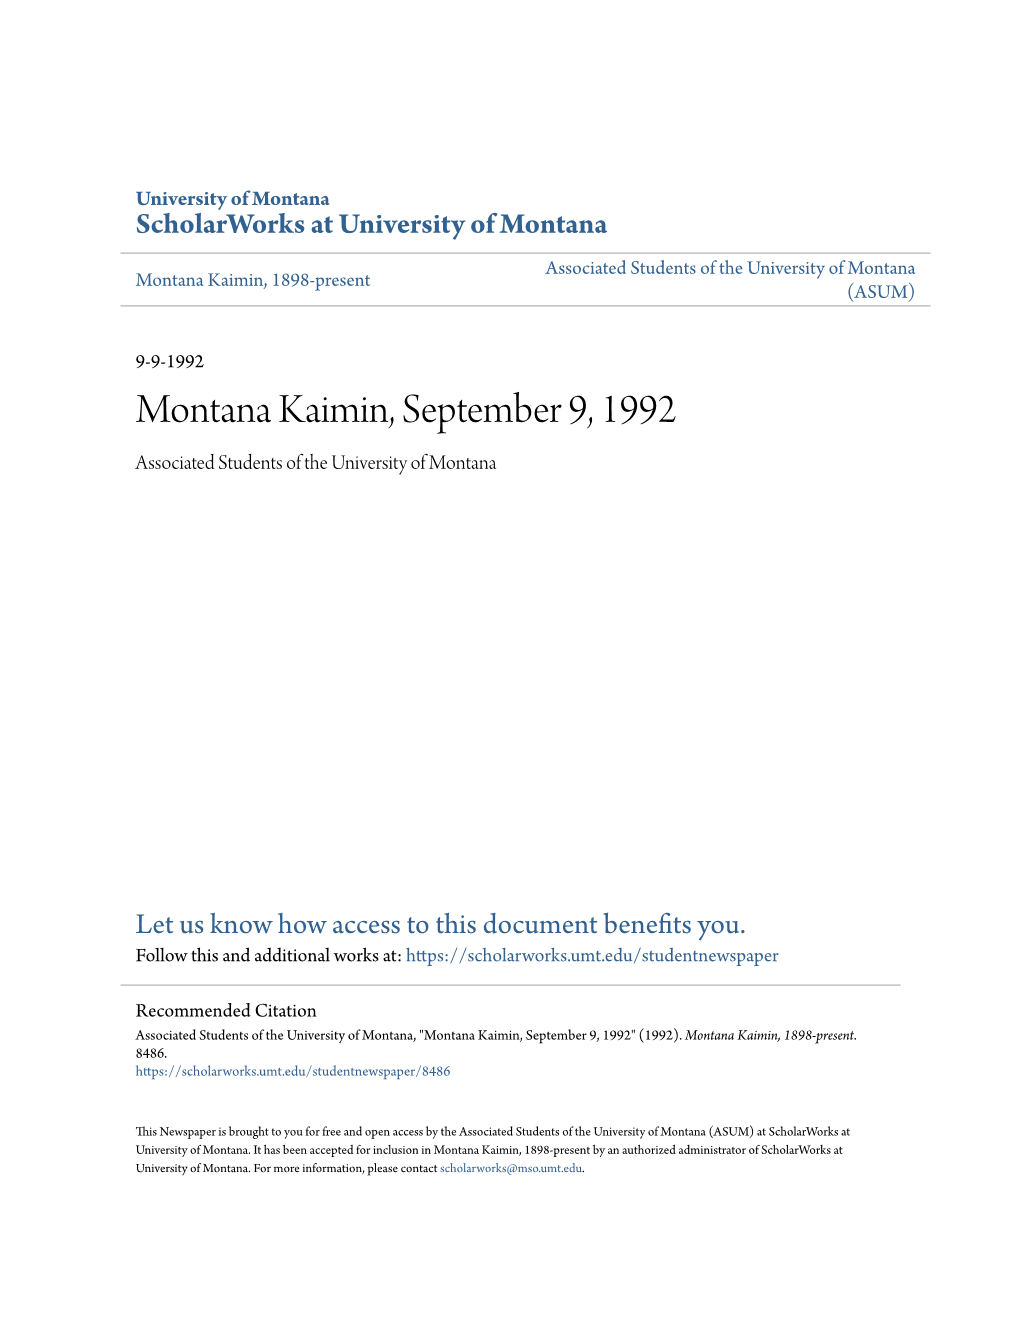 Montana Kaimin, September 9, 1992 Associated Students of the University of Montana